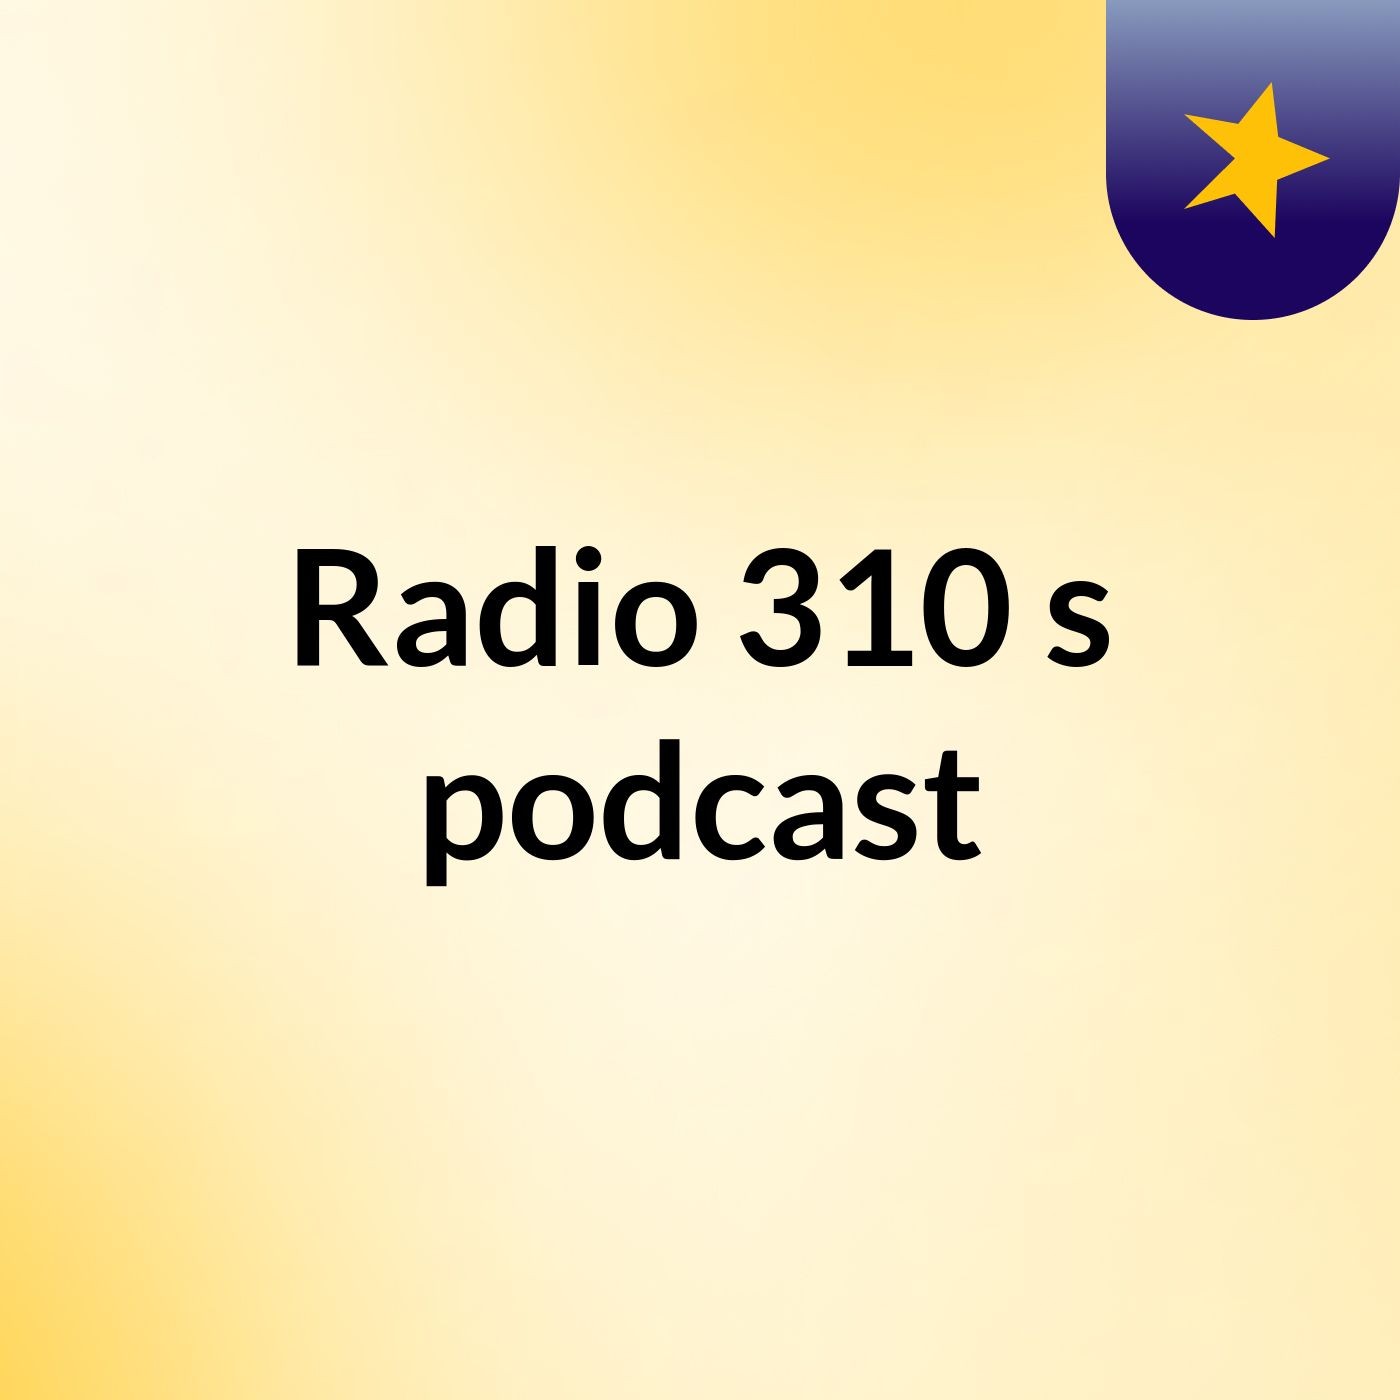 Radio 310's podcast